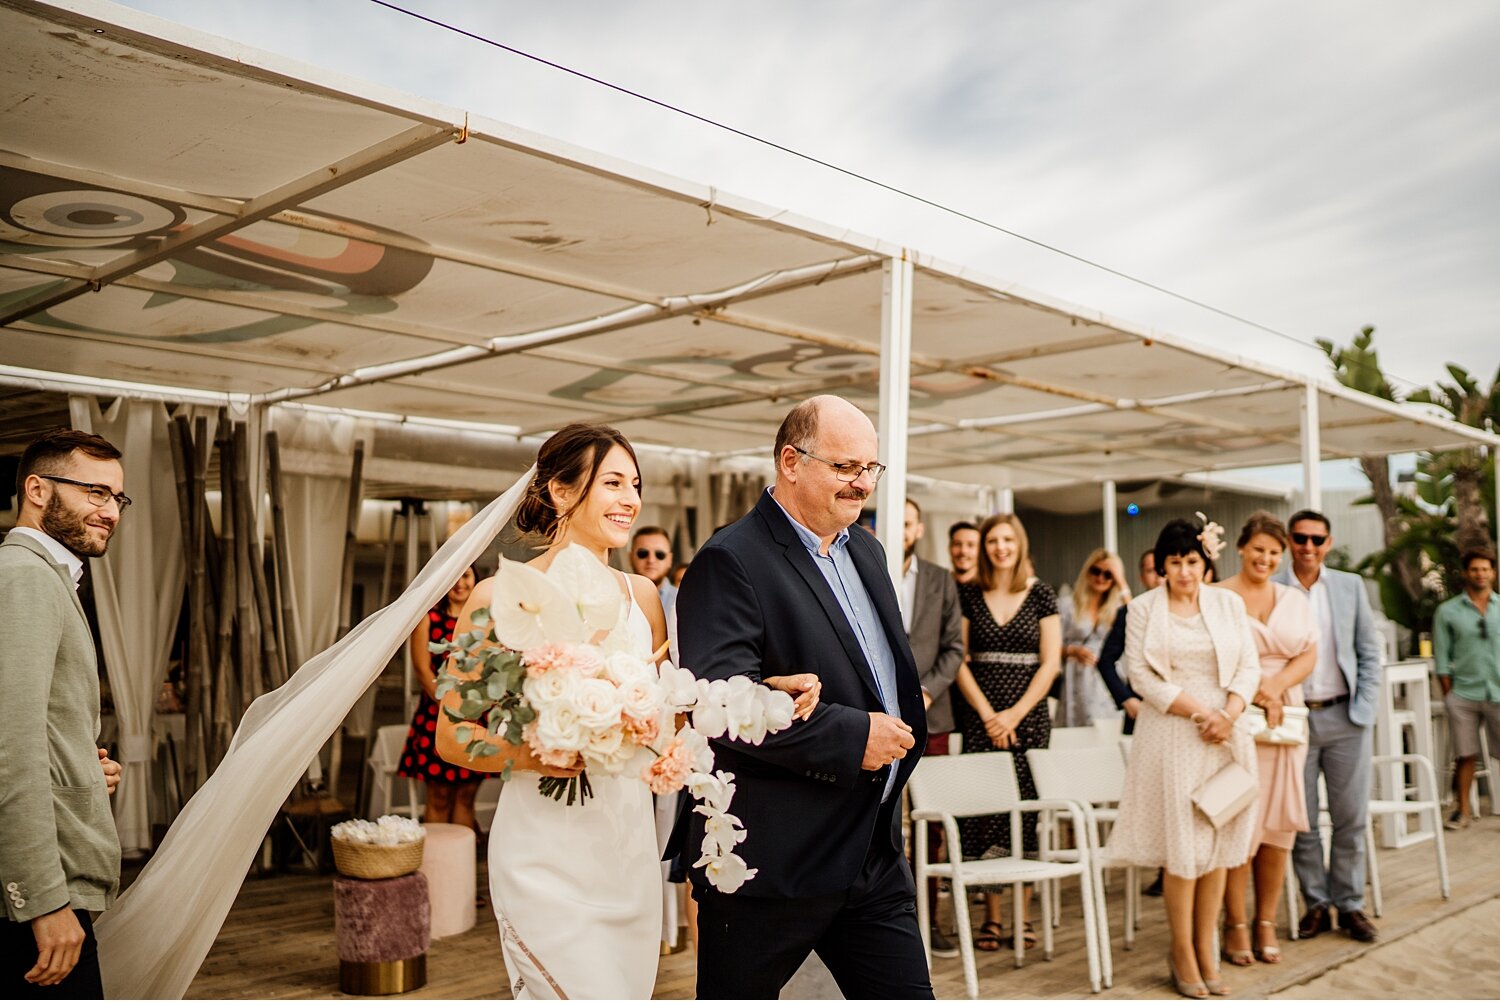 AB Weddings - Kamila i Wiktor - ślub w Portugalii - 090.JPG